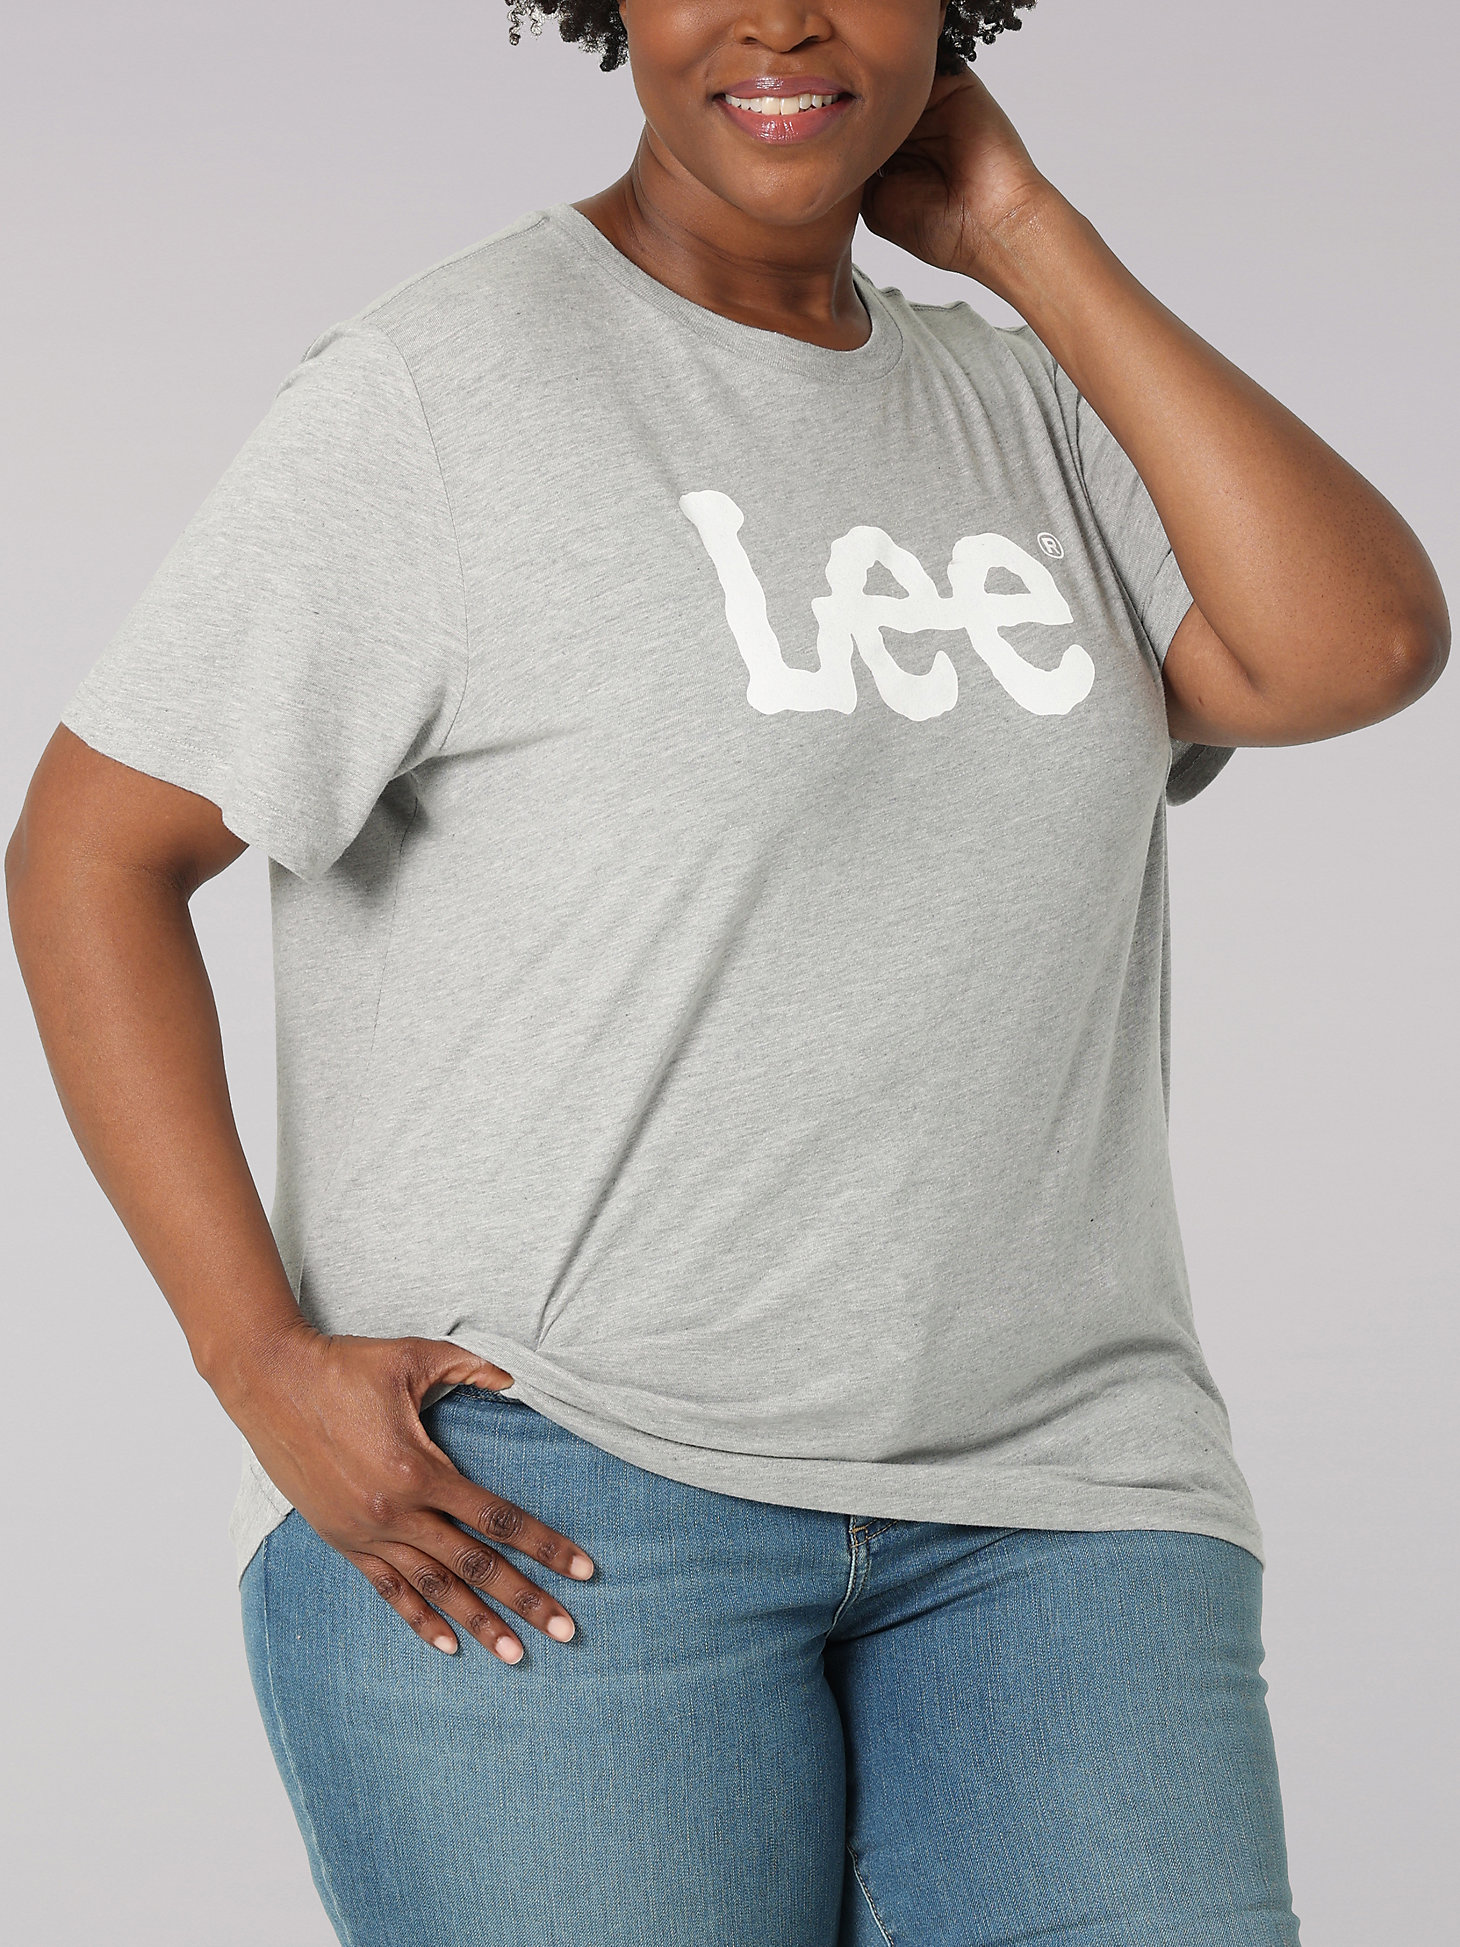 Women's Lee Logo Tee (Plus) in Light Grey Heather main view